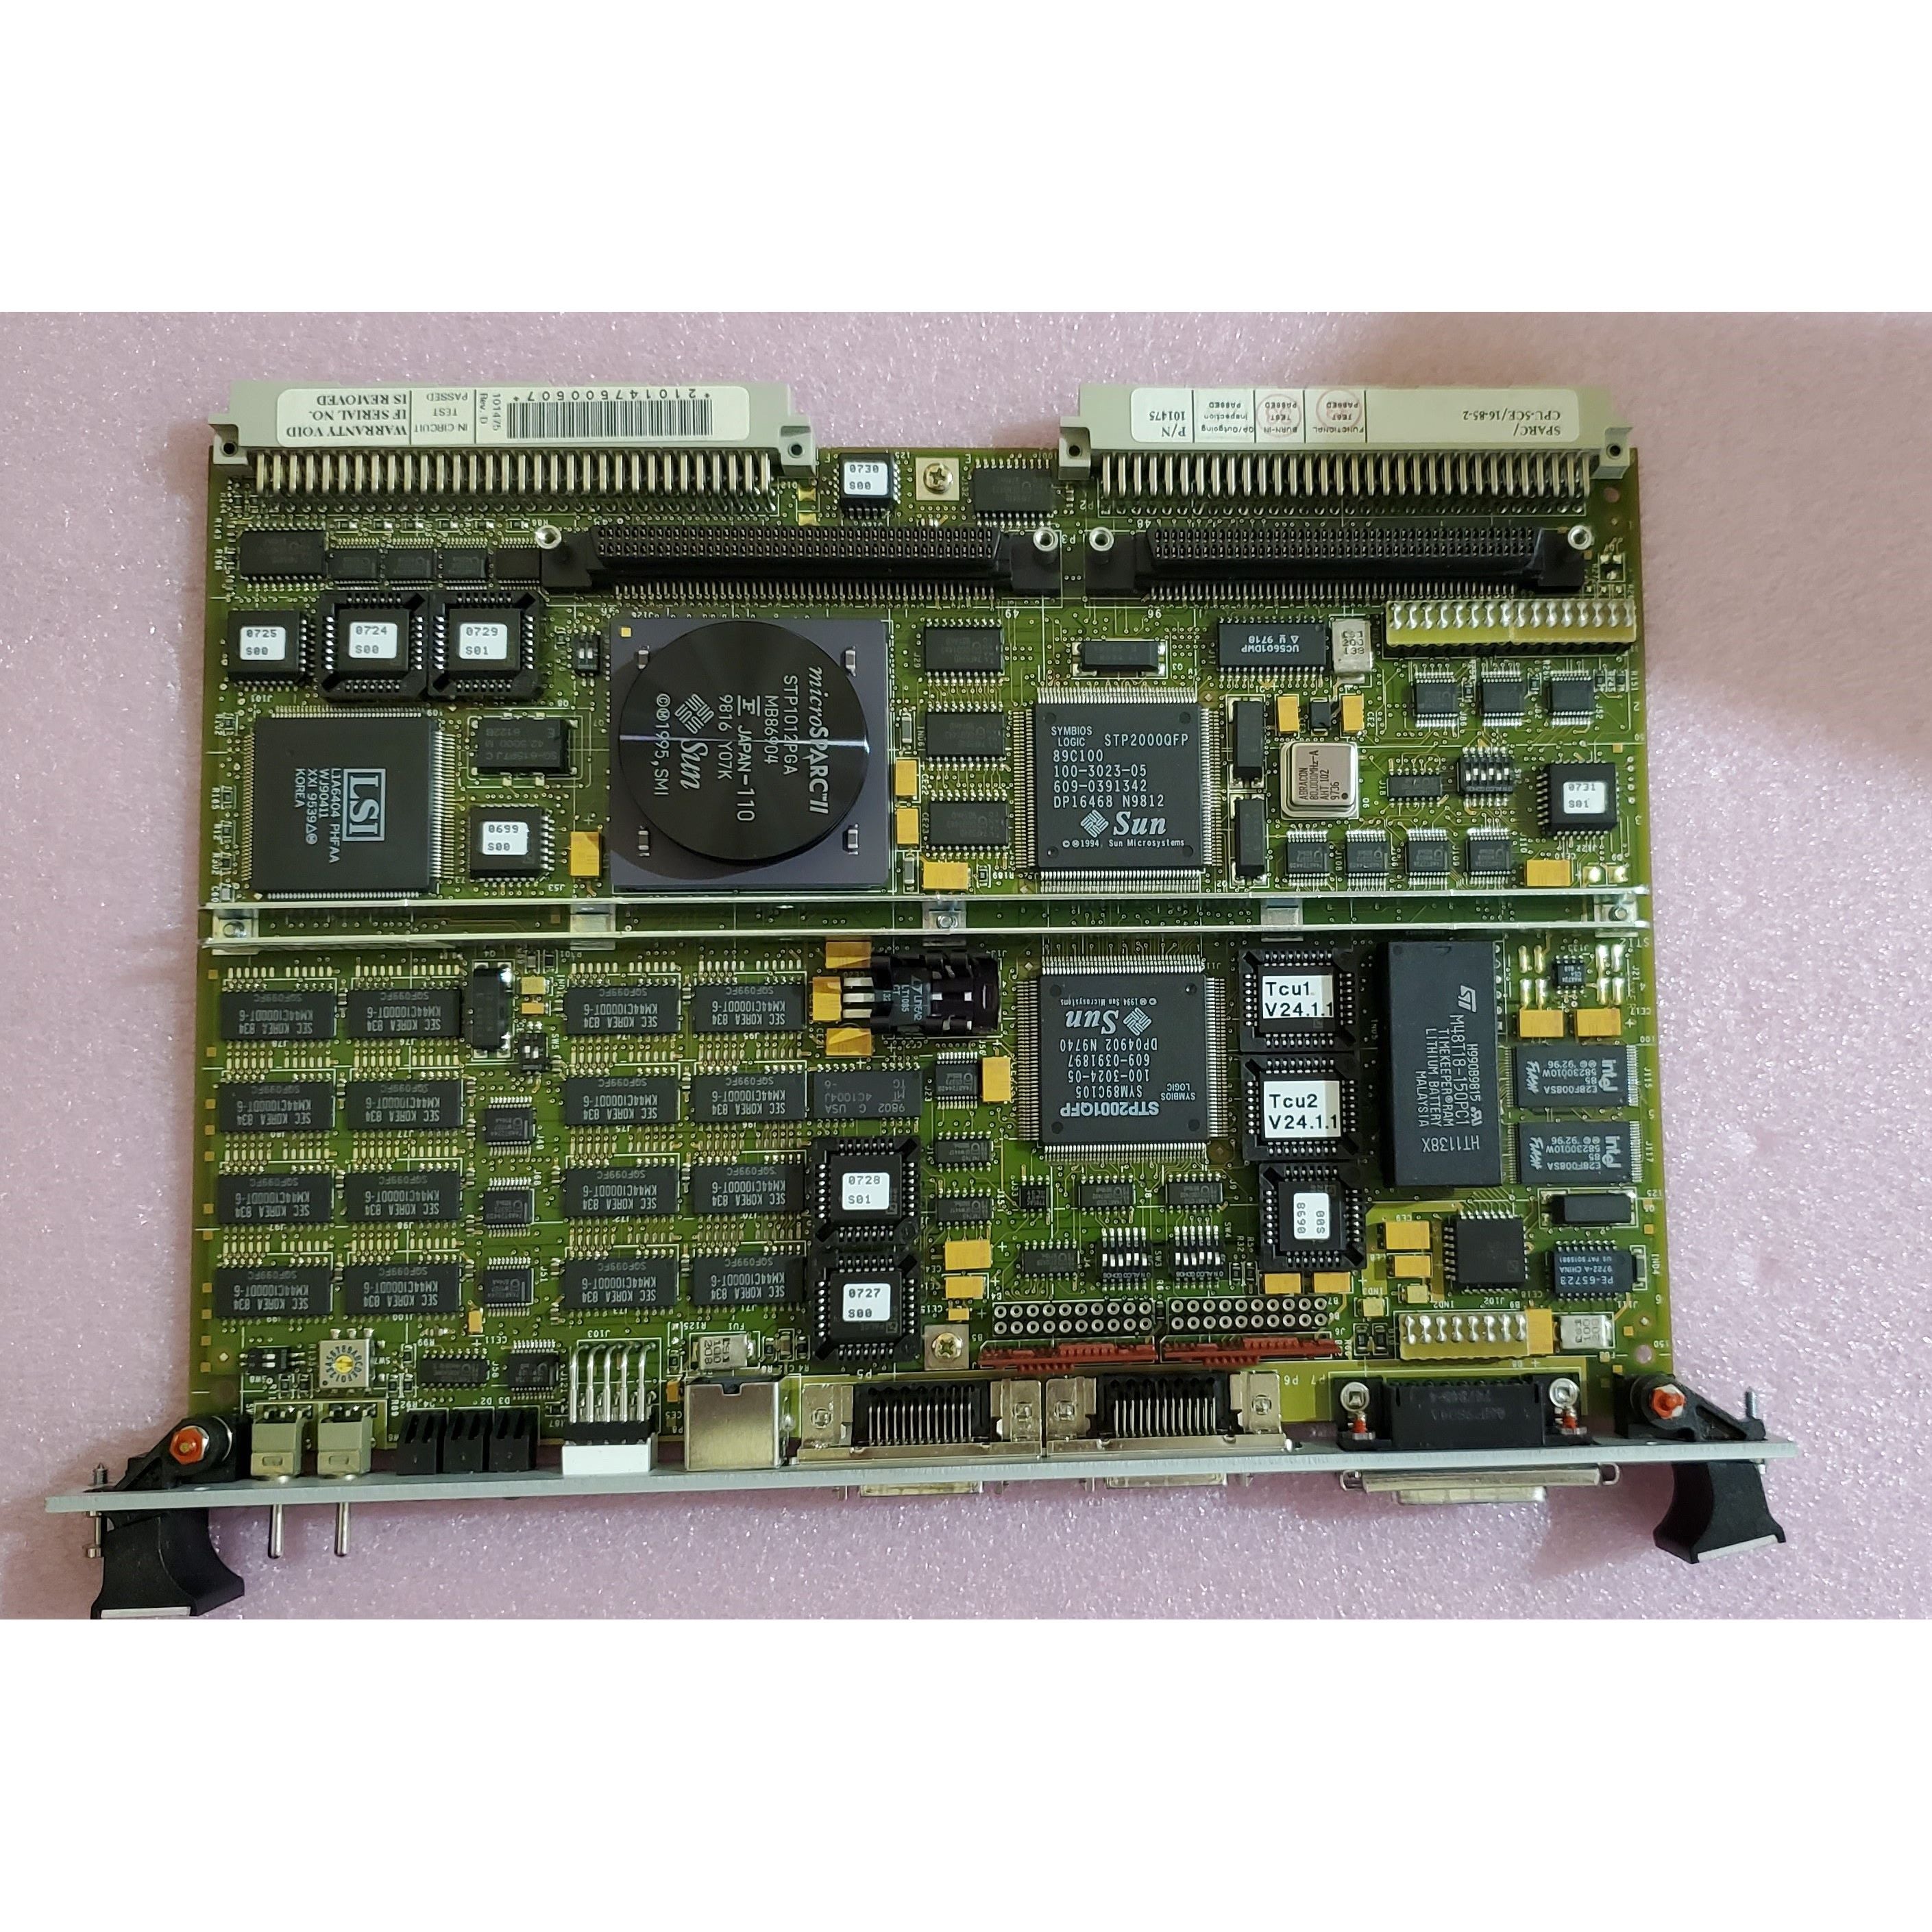 CPU-5CE/16-85-2 |力计算机